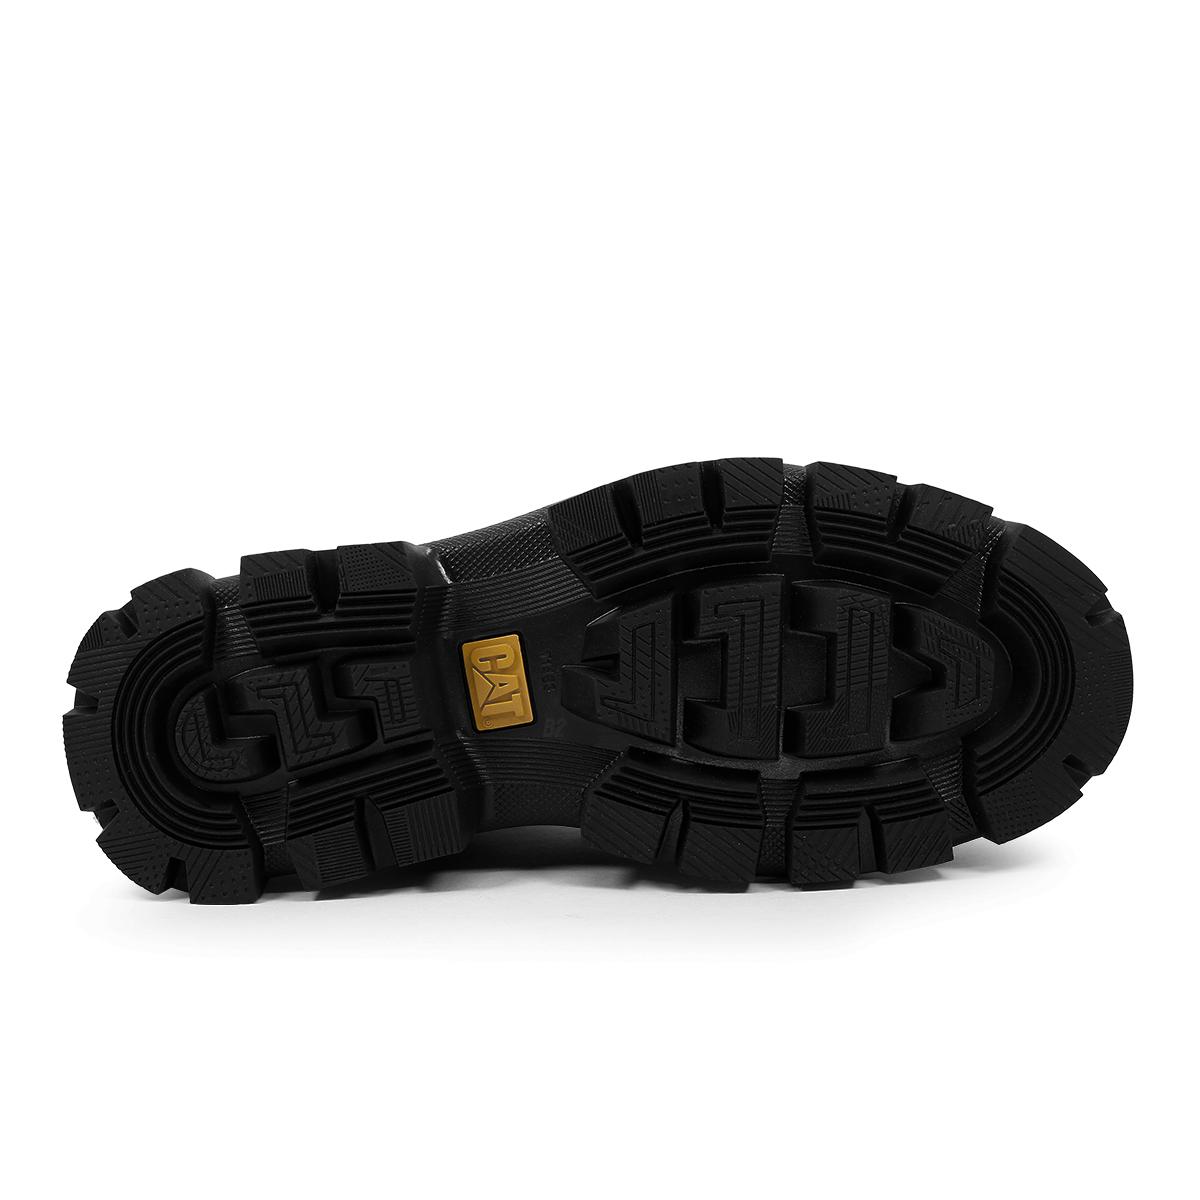 ota Caterpillar Hardwear Masculina Preta - Conforto e Durabilidade